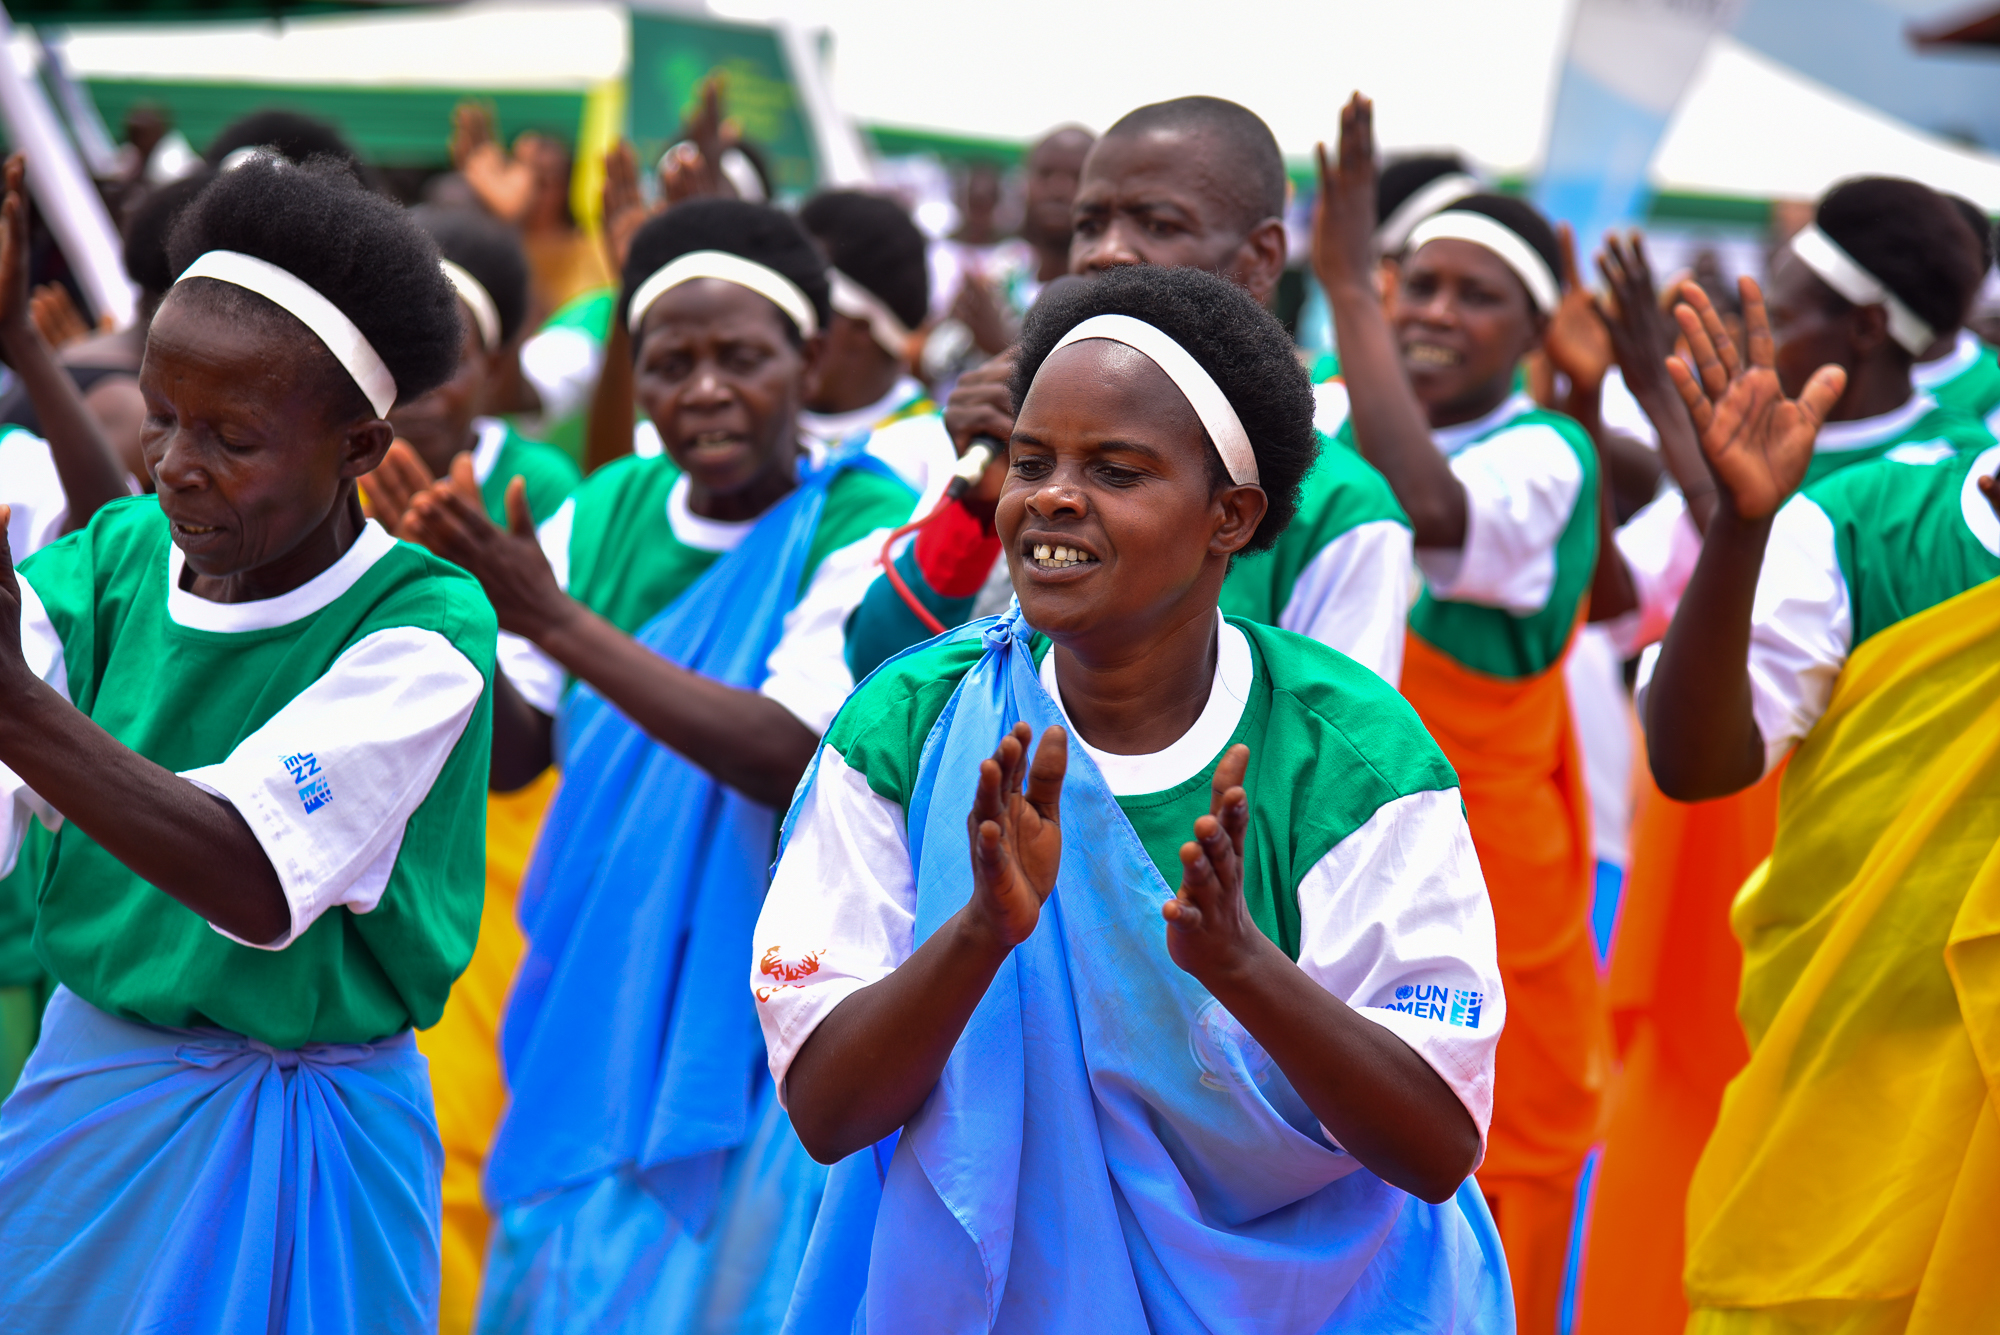 Members of CNF Kigoma presenting a cultural dance at the International Rural Women’s Day celebration. Photo: UN Women/James Ochweri